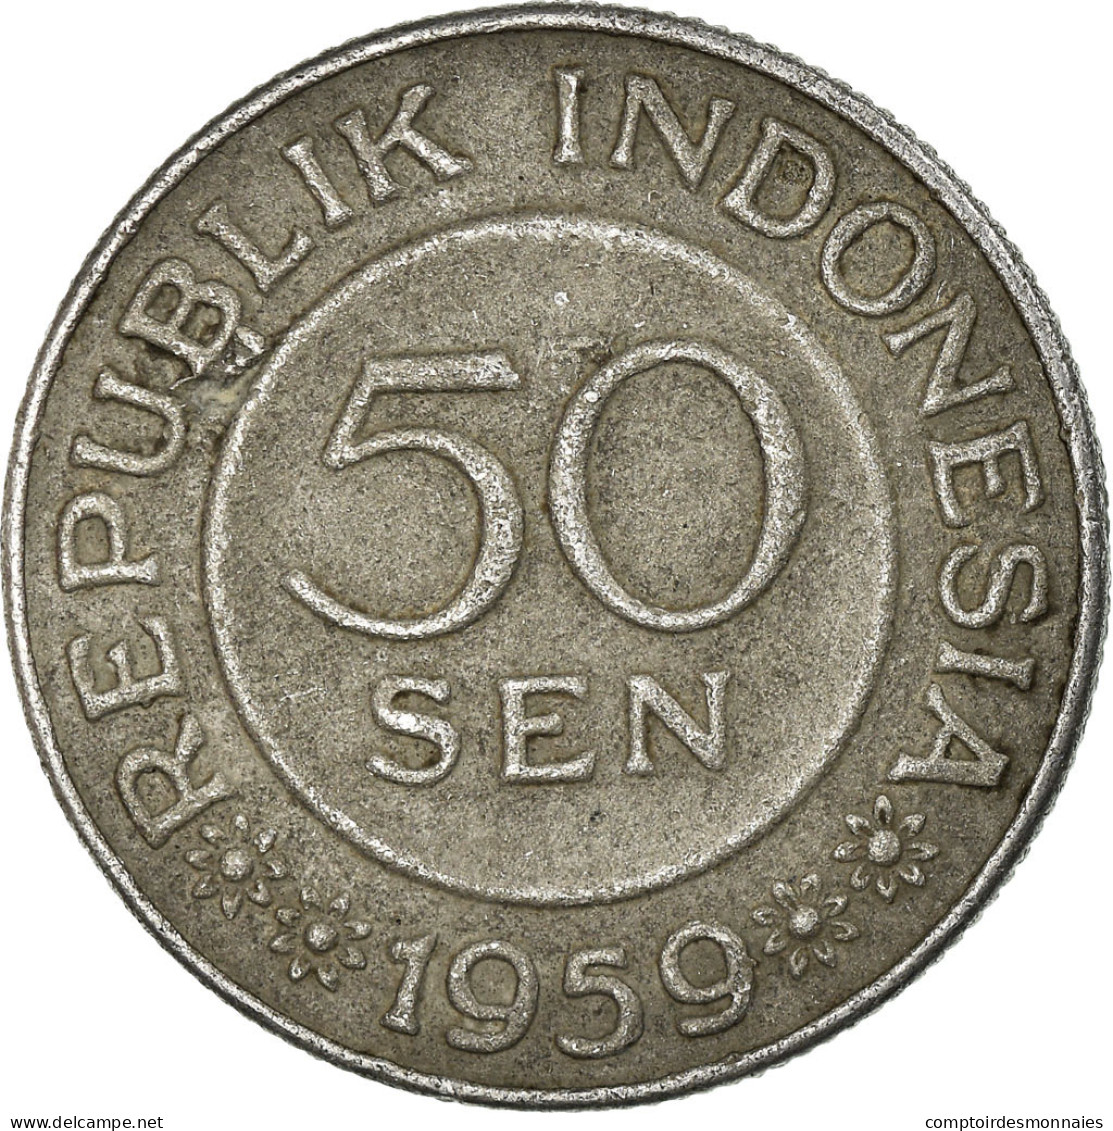 Monnaie, Indonésie, 50 Sen, 1959, TTB, Aluminium, KM:14 - Indonesien